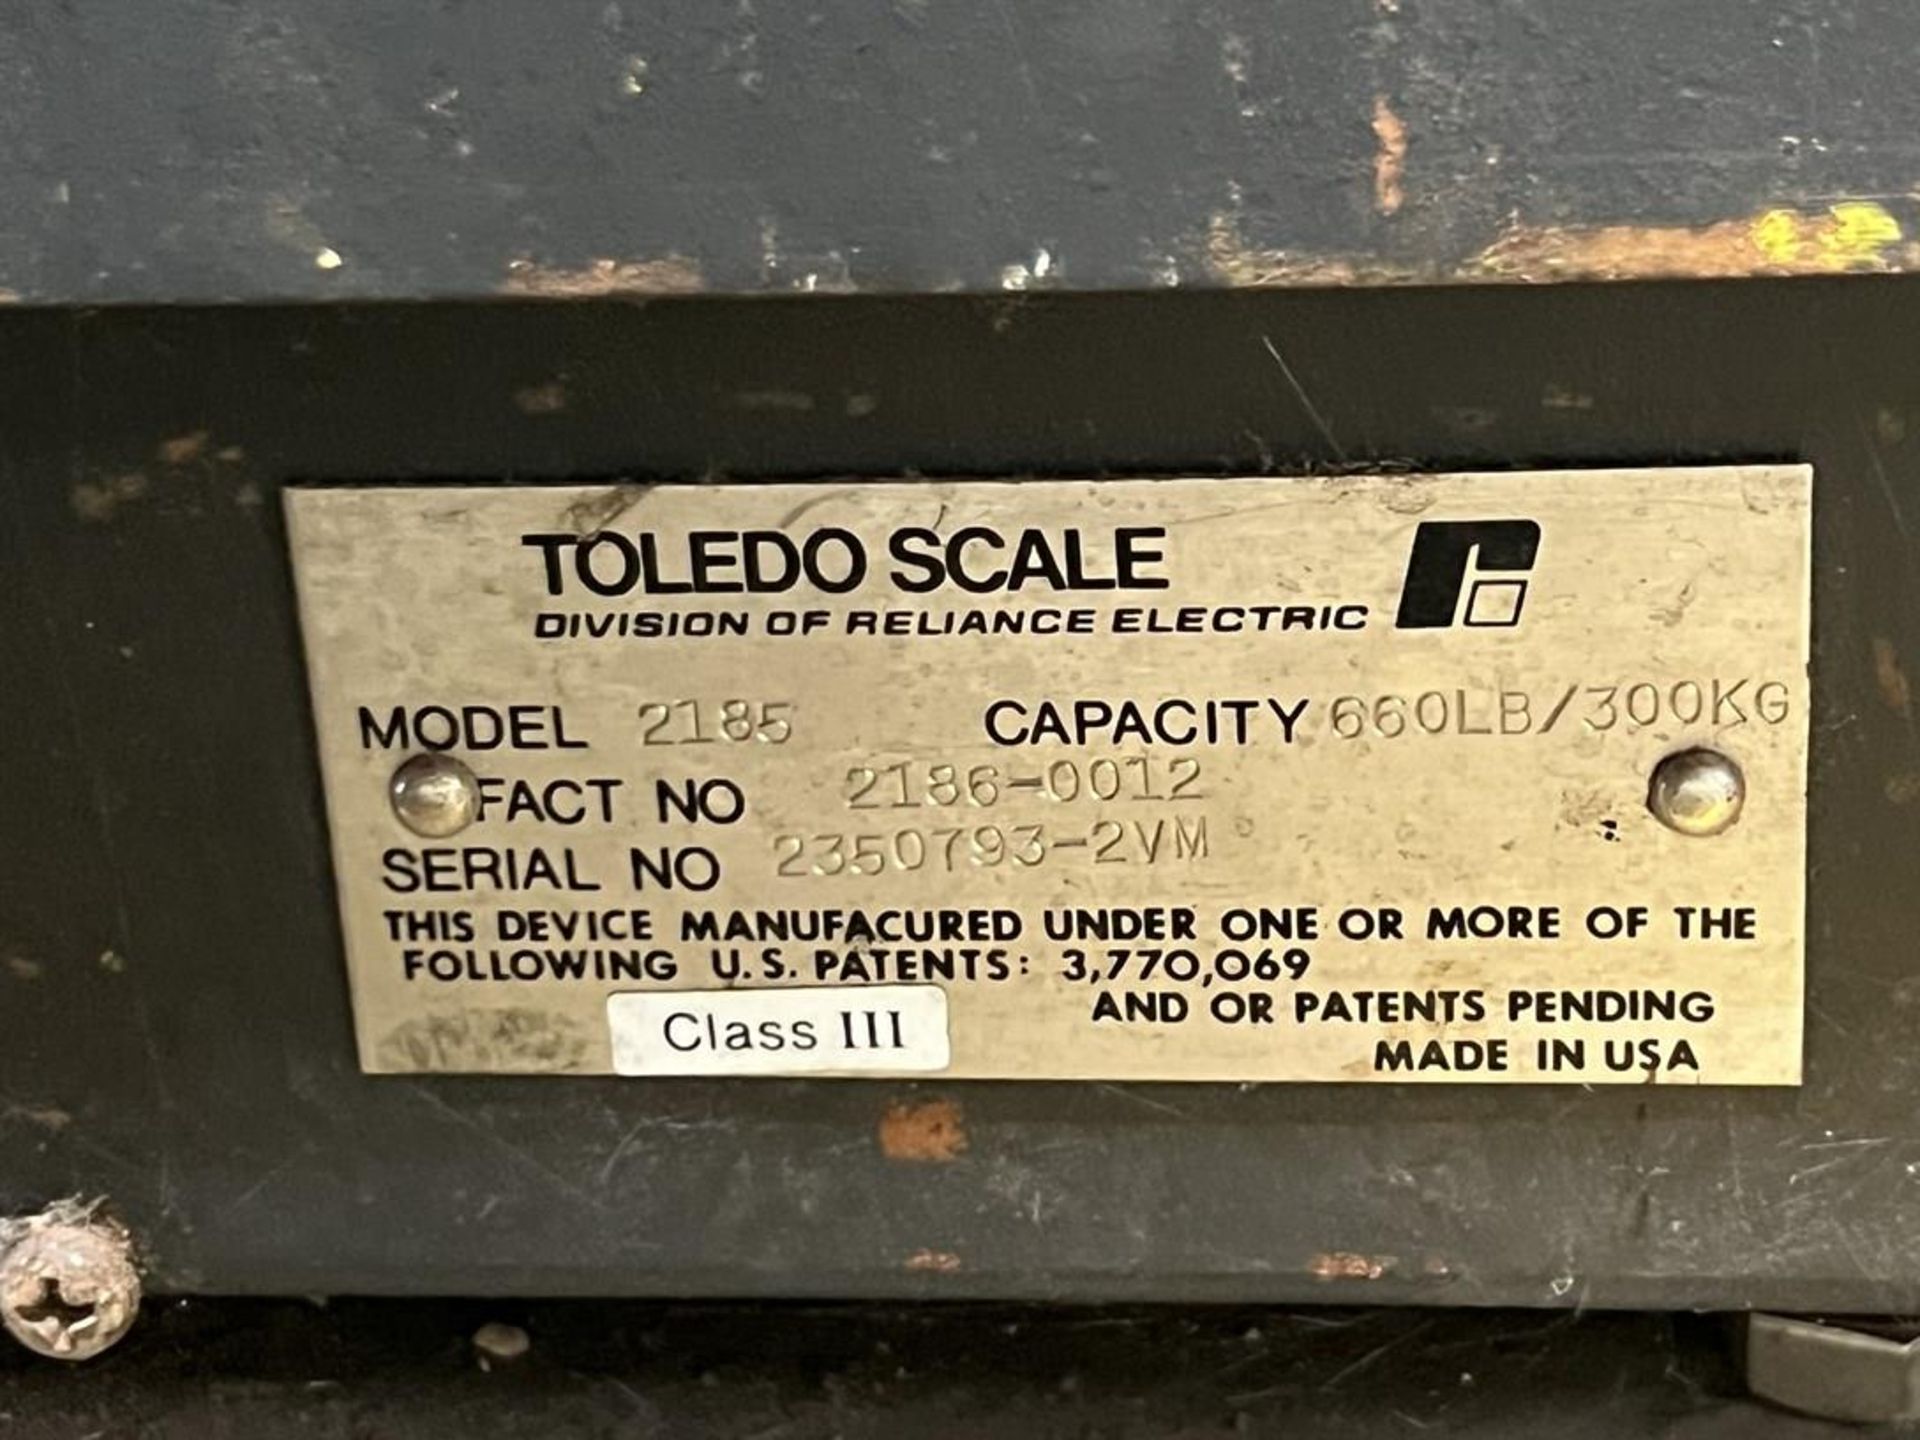 Toledo 2185 Platform Scale, s/n 2350793-2VM, 660 Lb Capacity w/ GSE 455 Digital Readout - Image 3 of 5